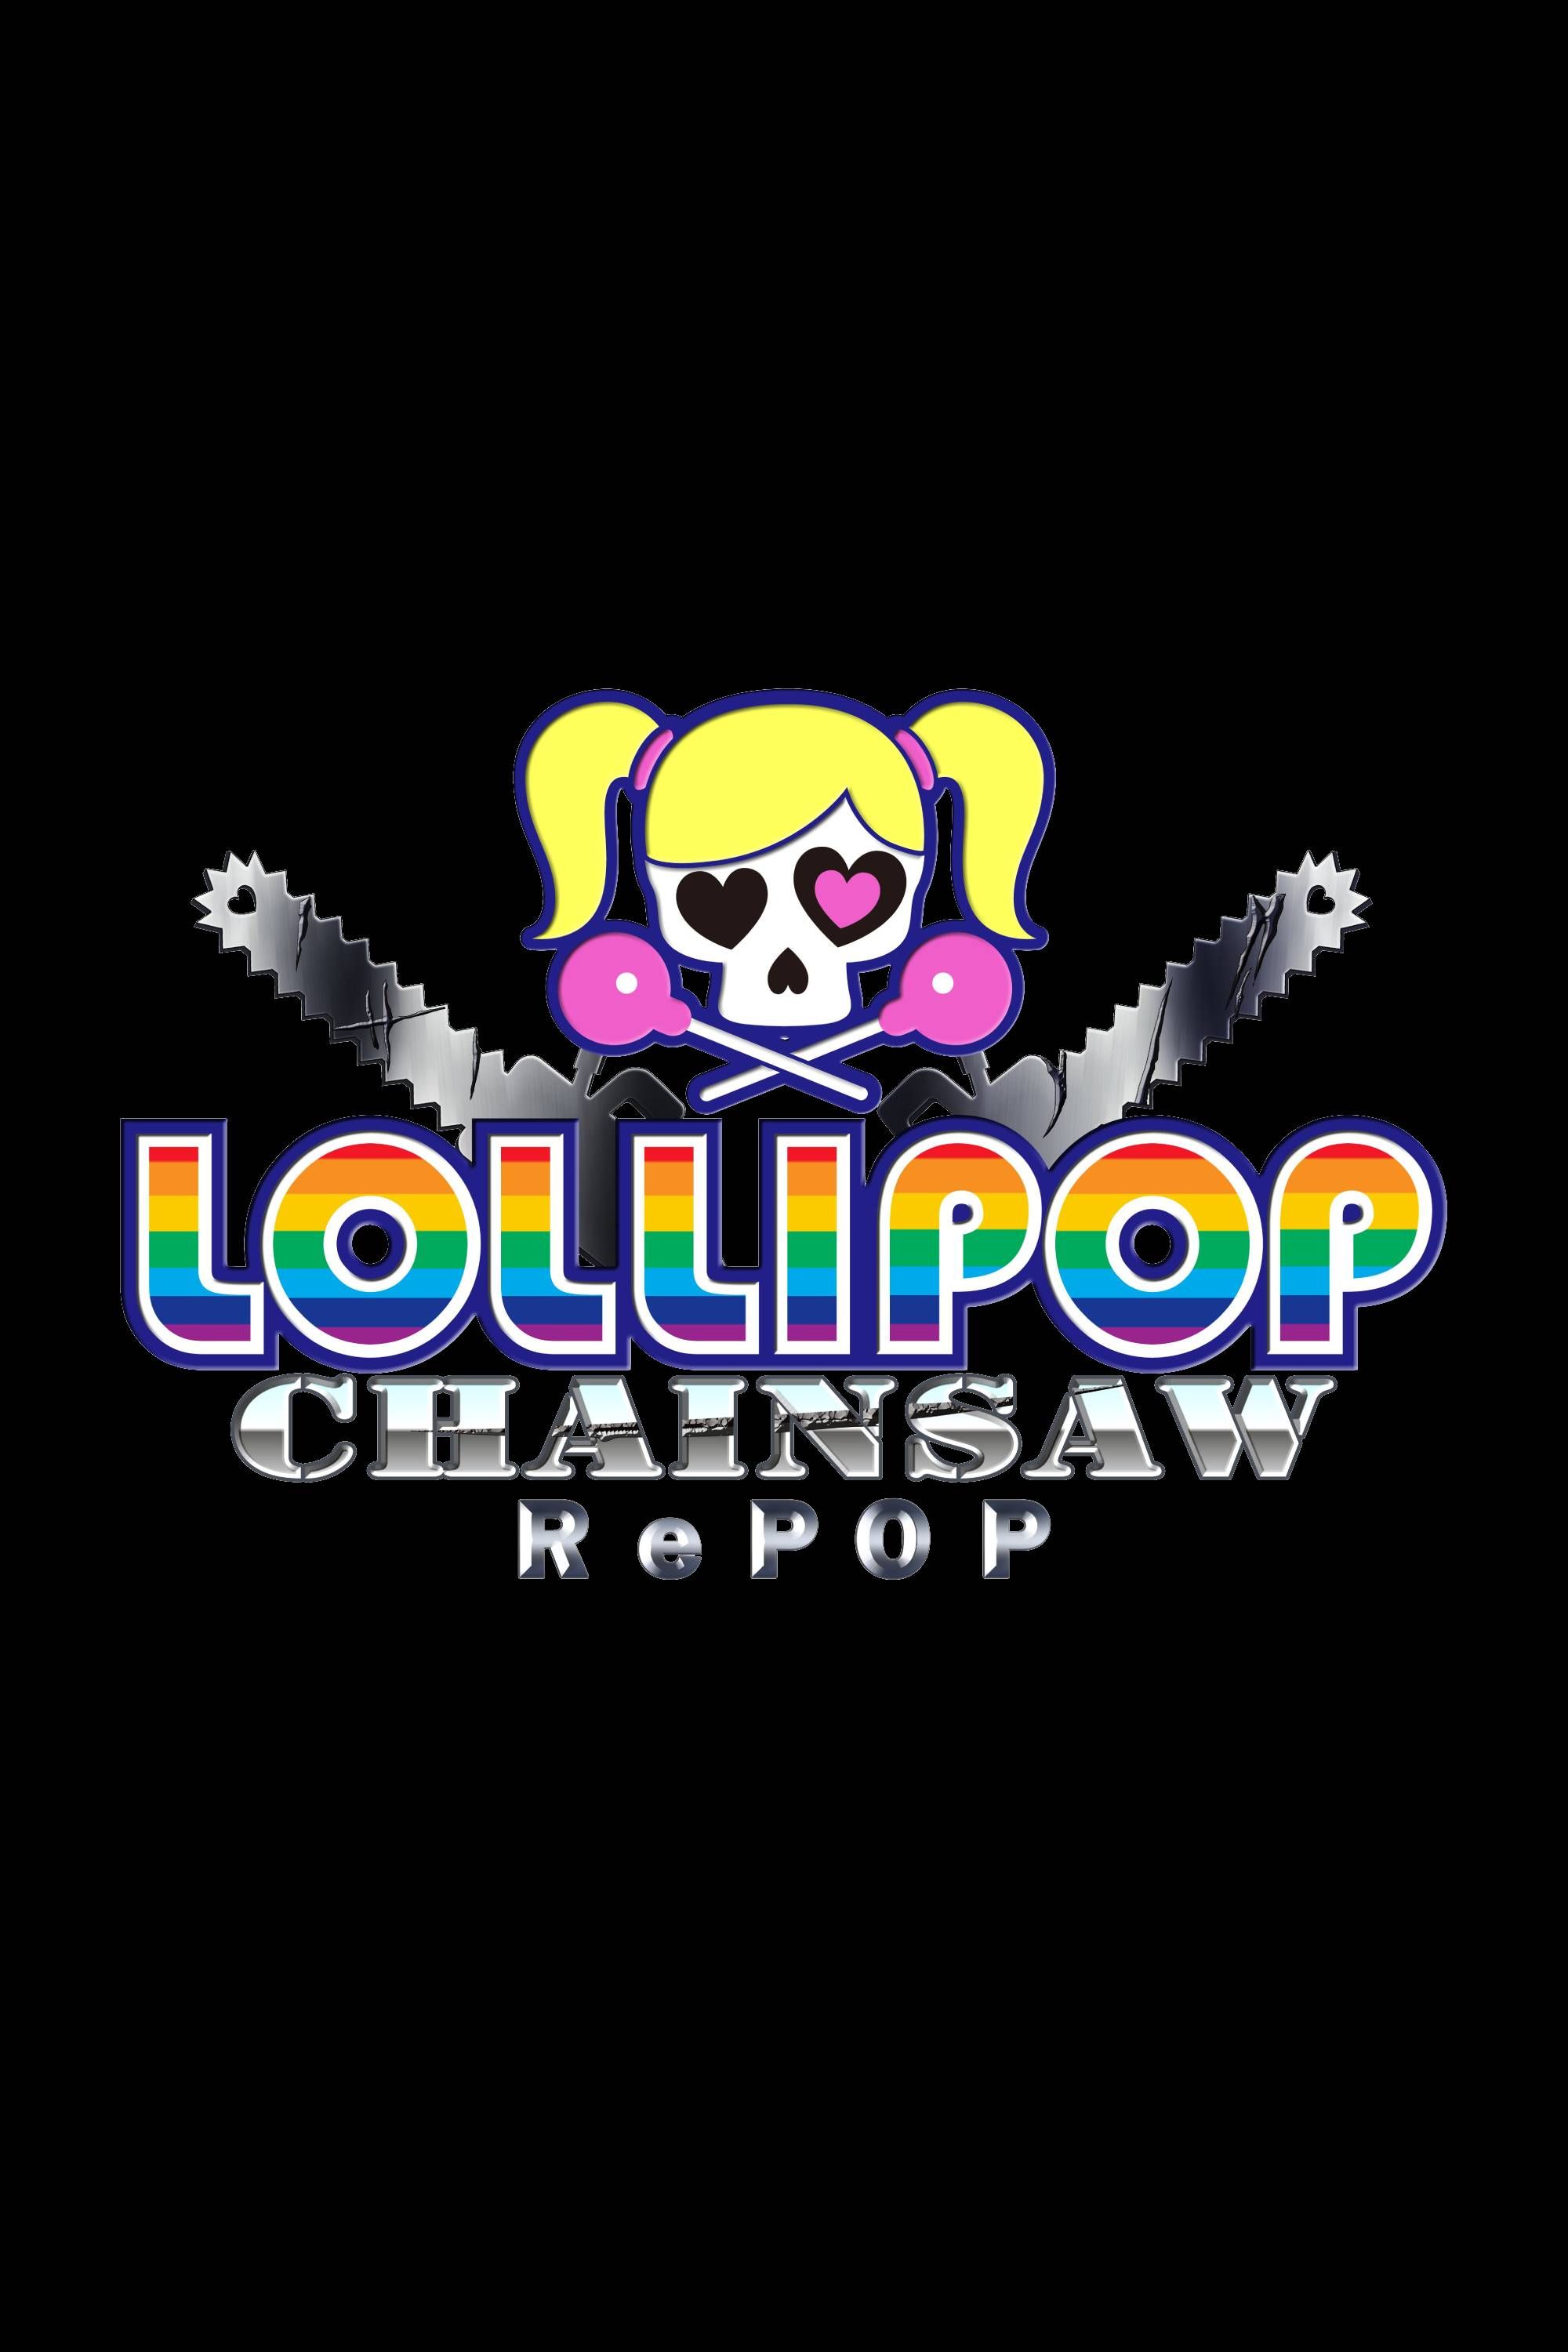 We Need A New Bully Alongside Lollipop Chainsaw